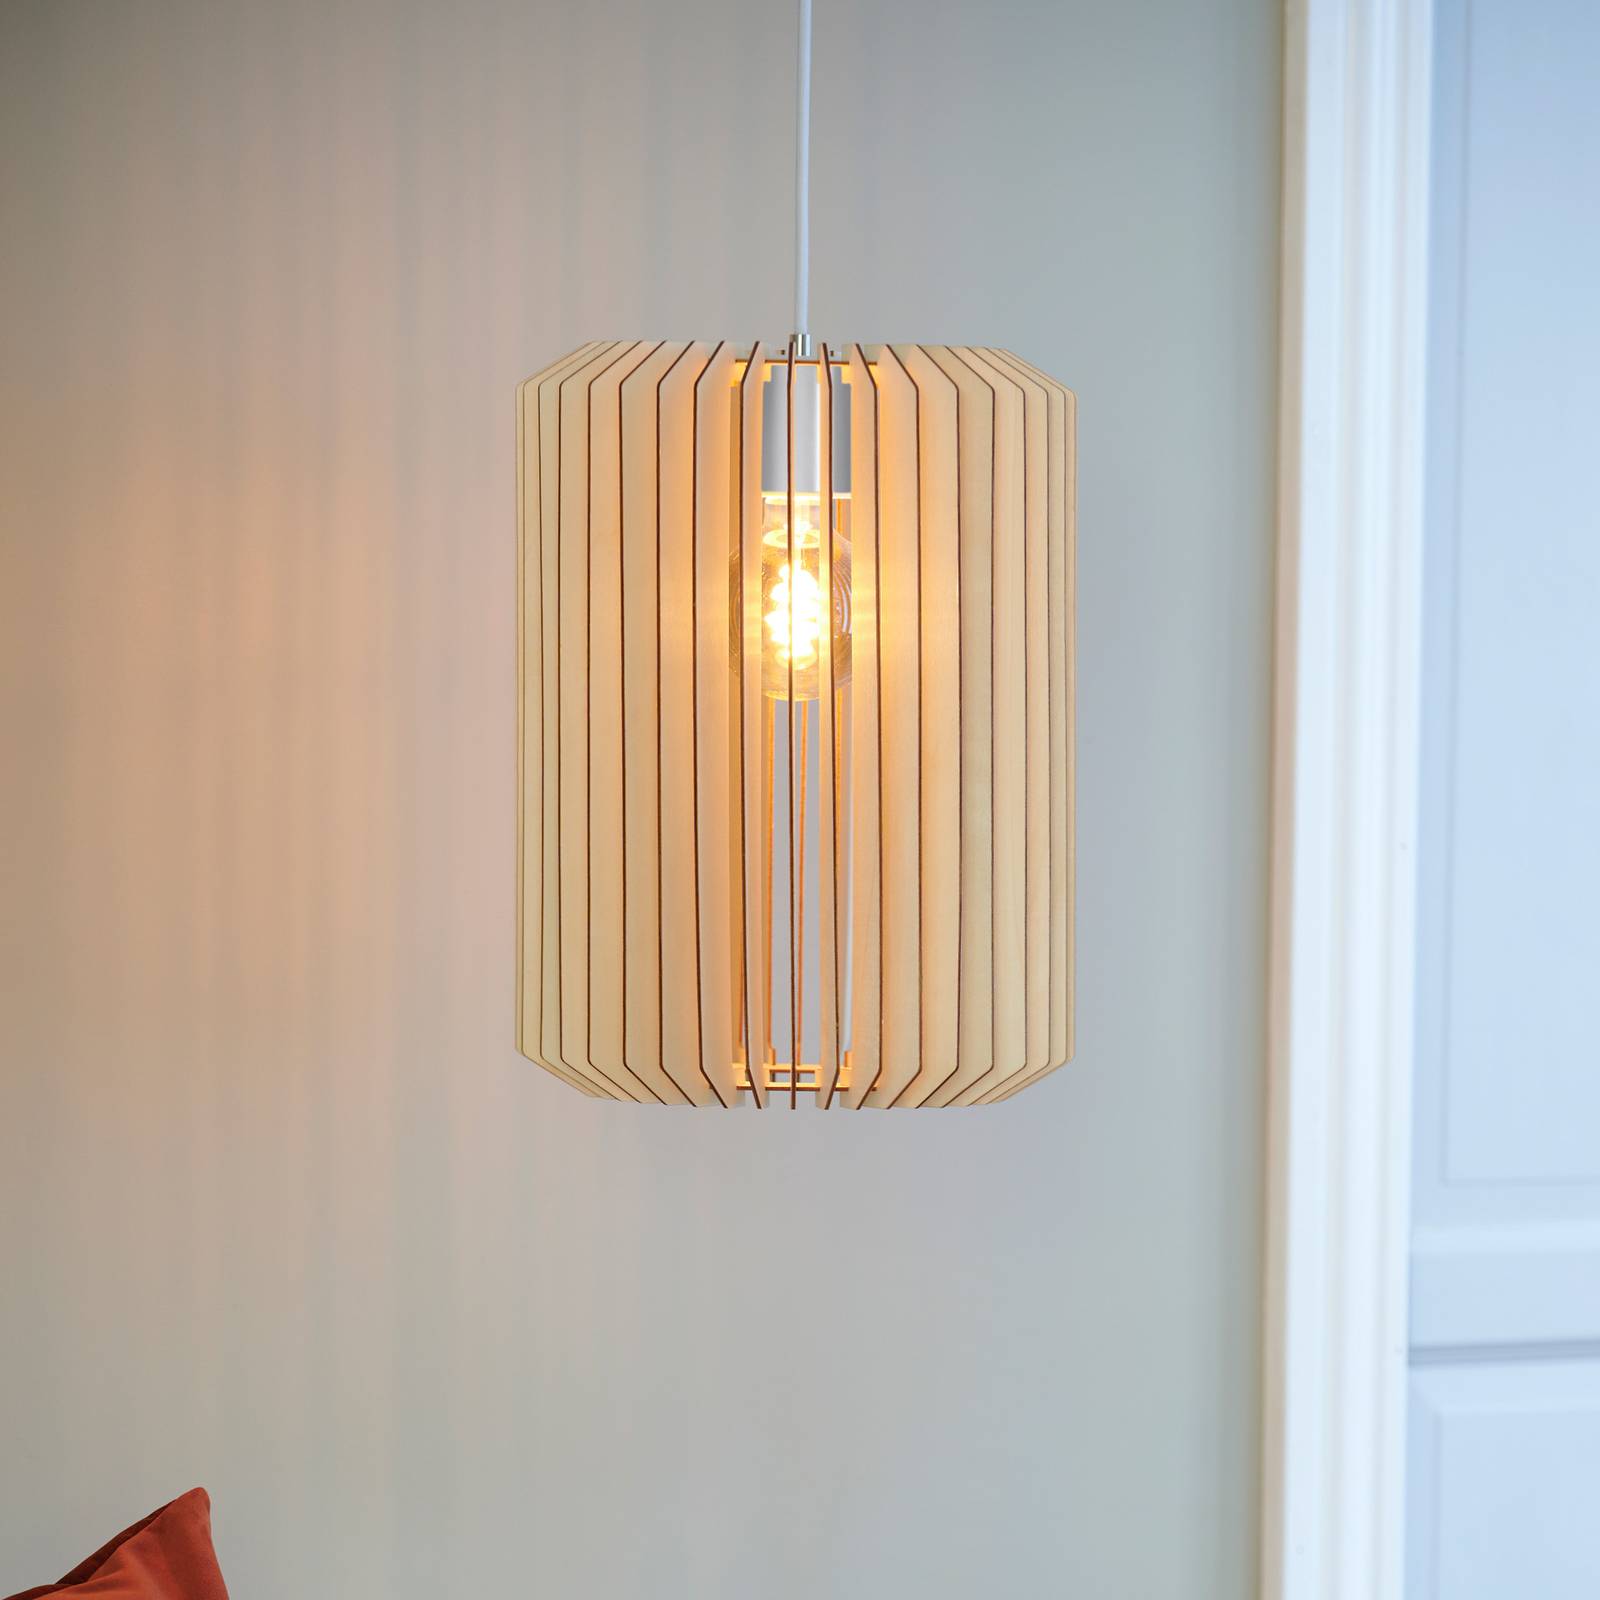 Asti 30 függő lámpa fa lécekből, 40 cm magas